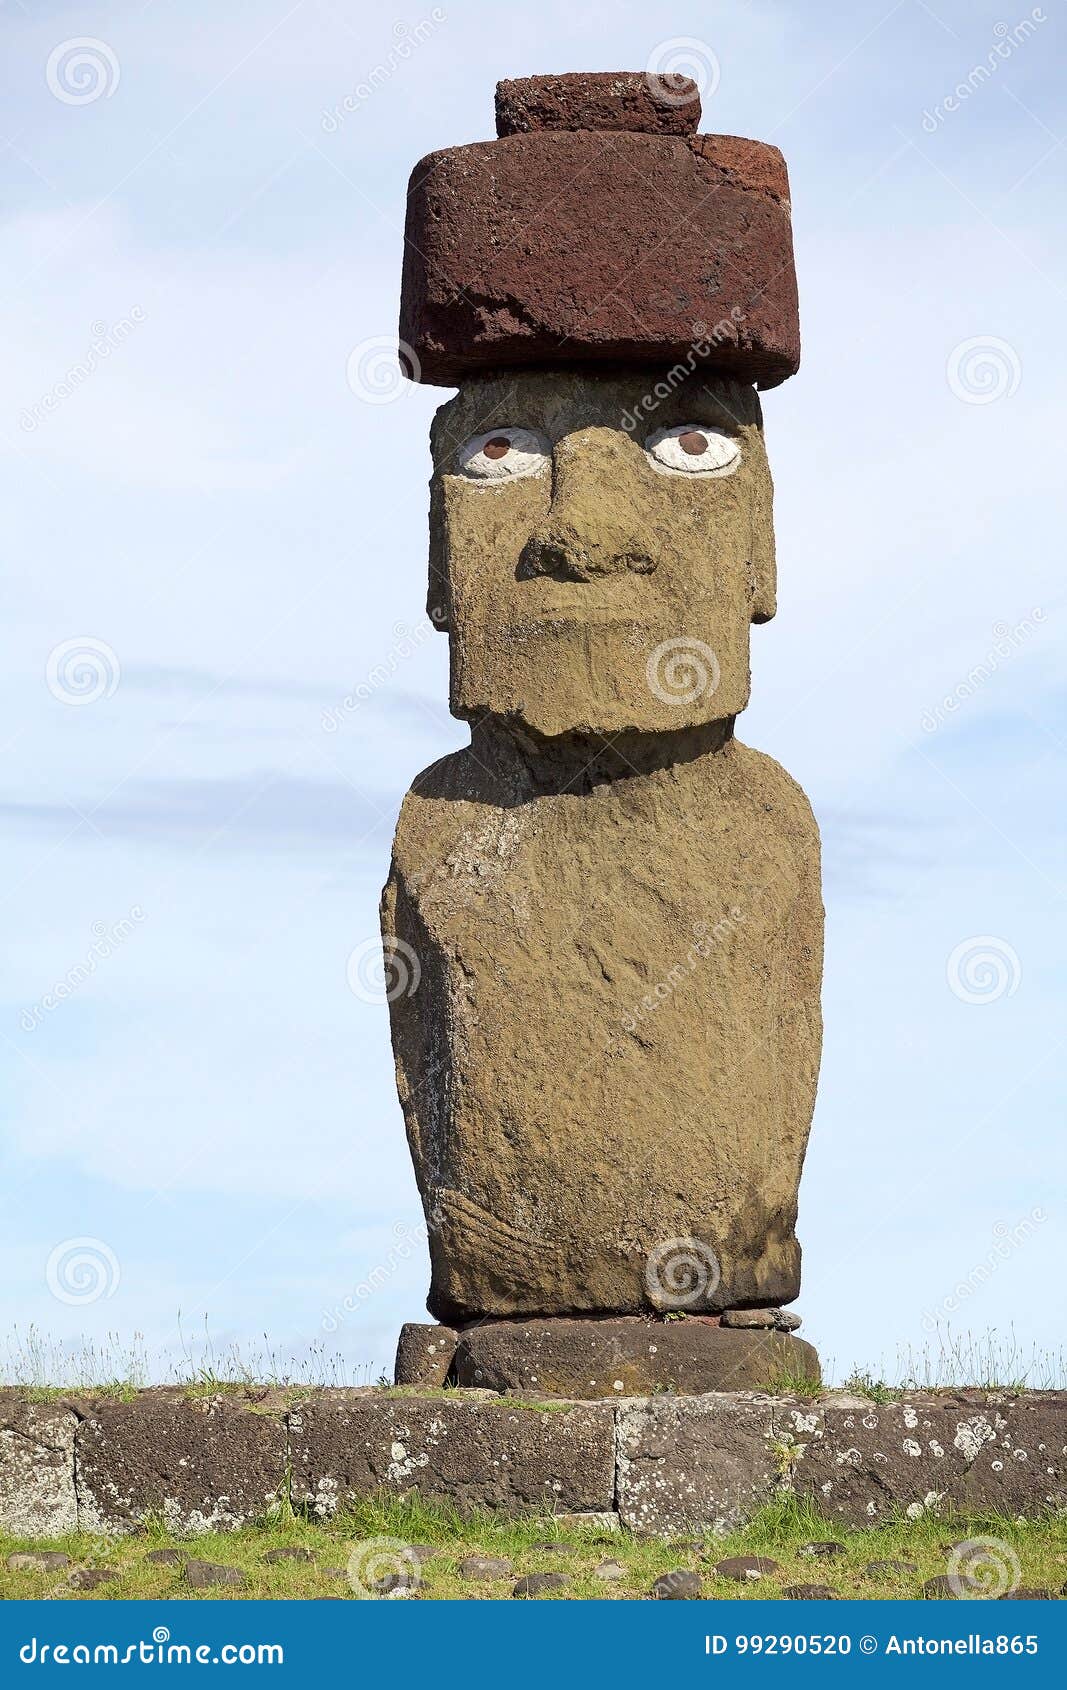 Moai statue in Ahu Tahai Easter Island | X days in Y